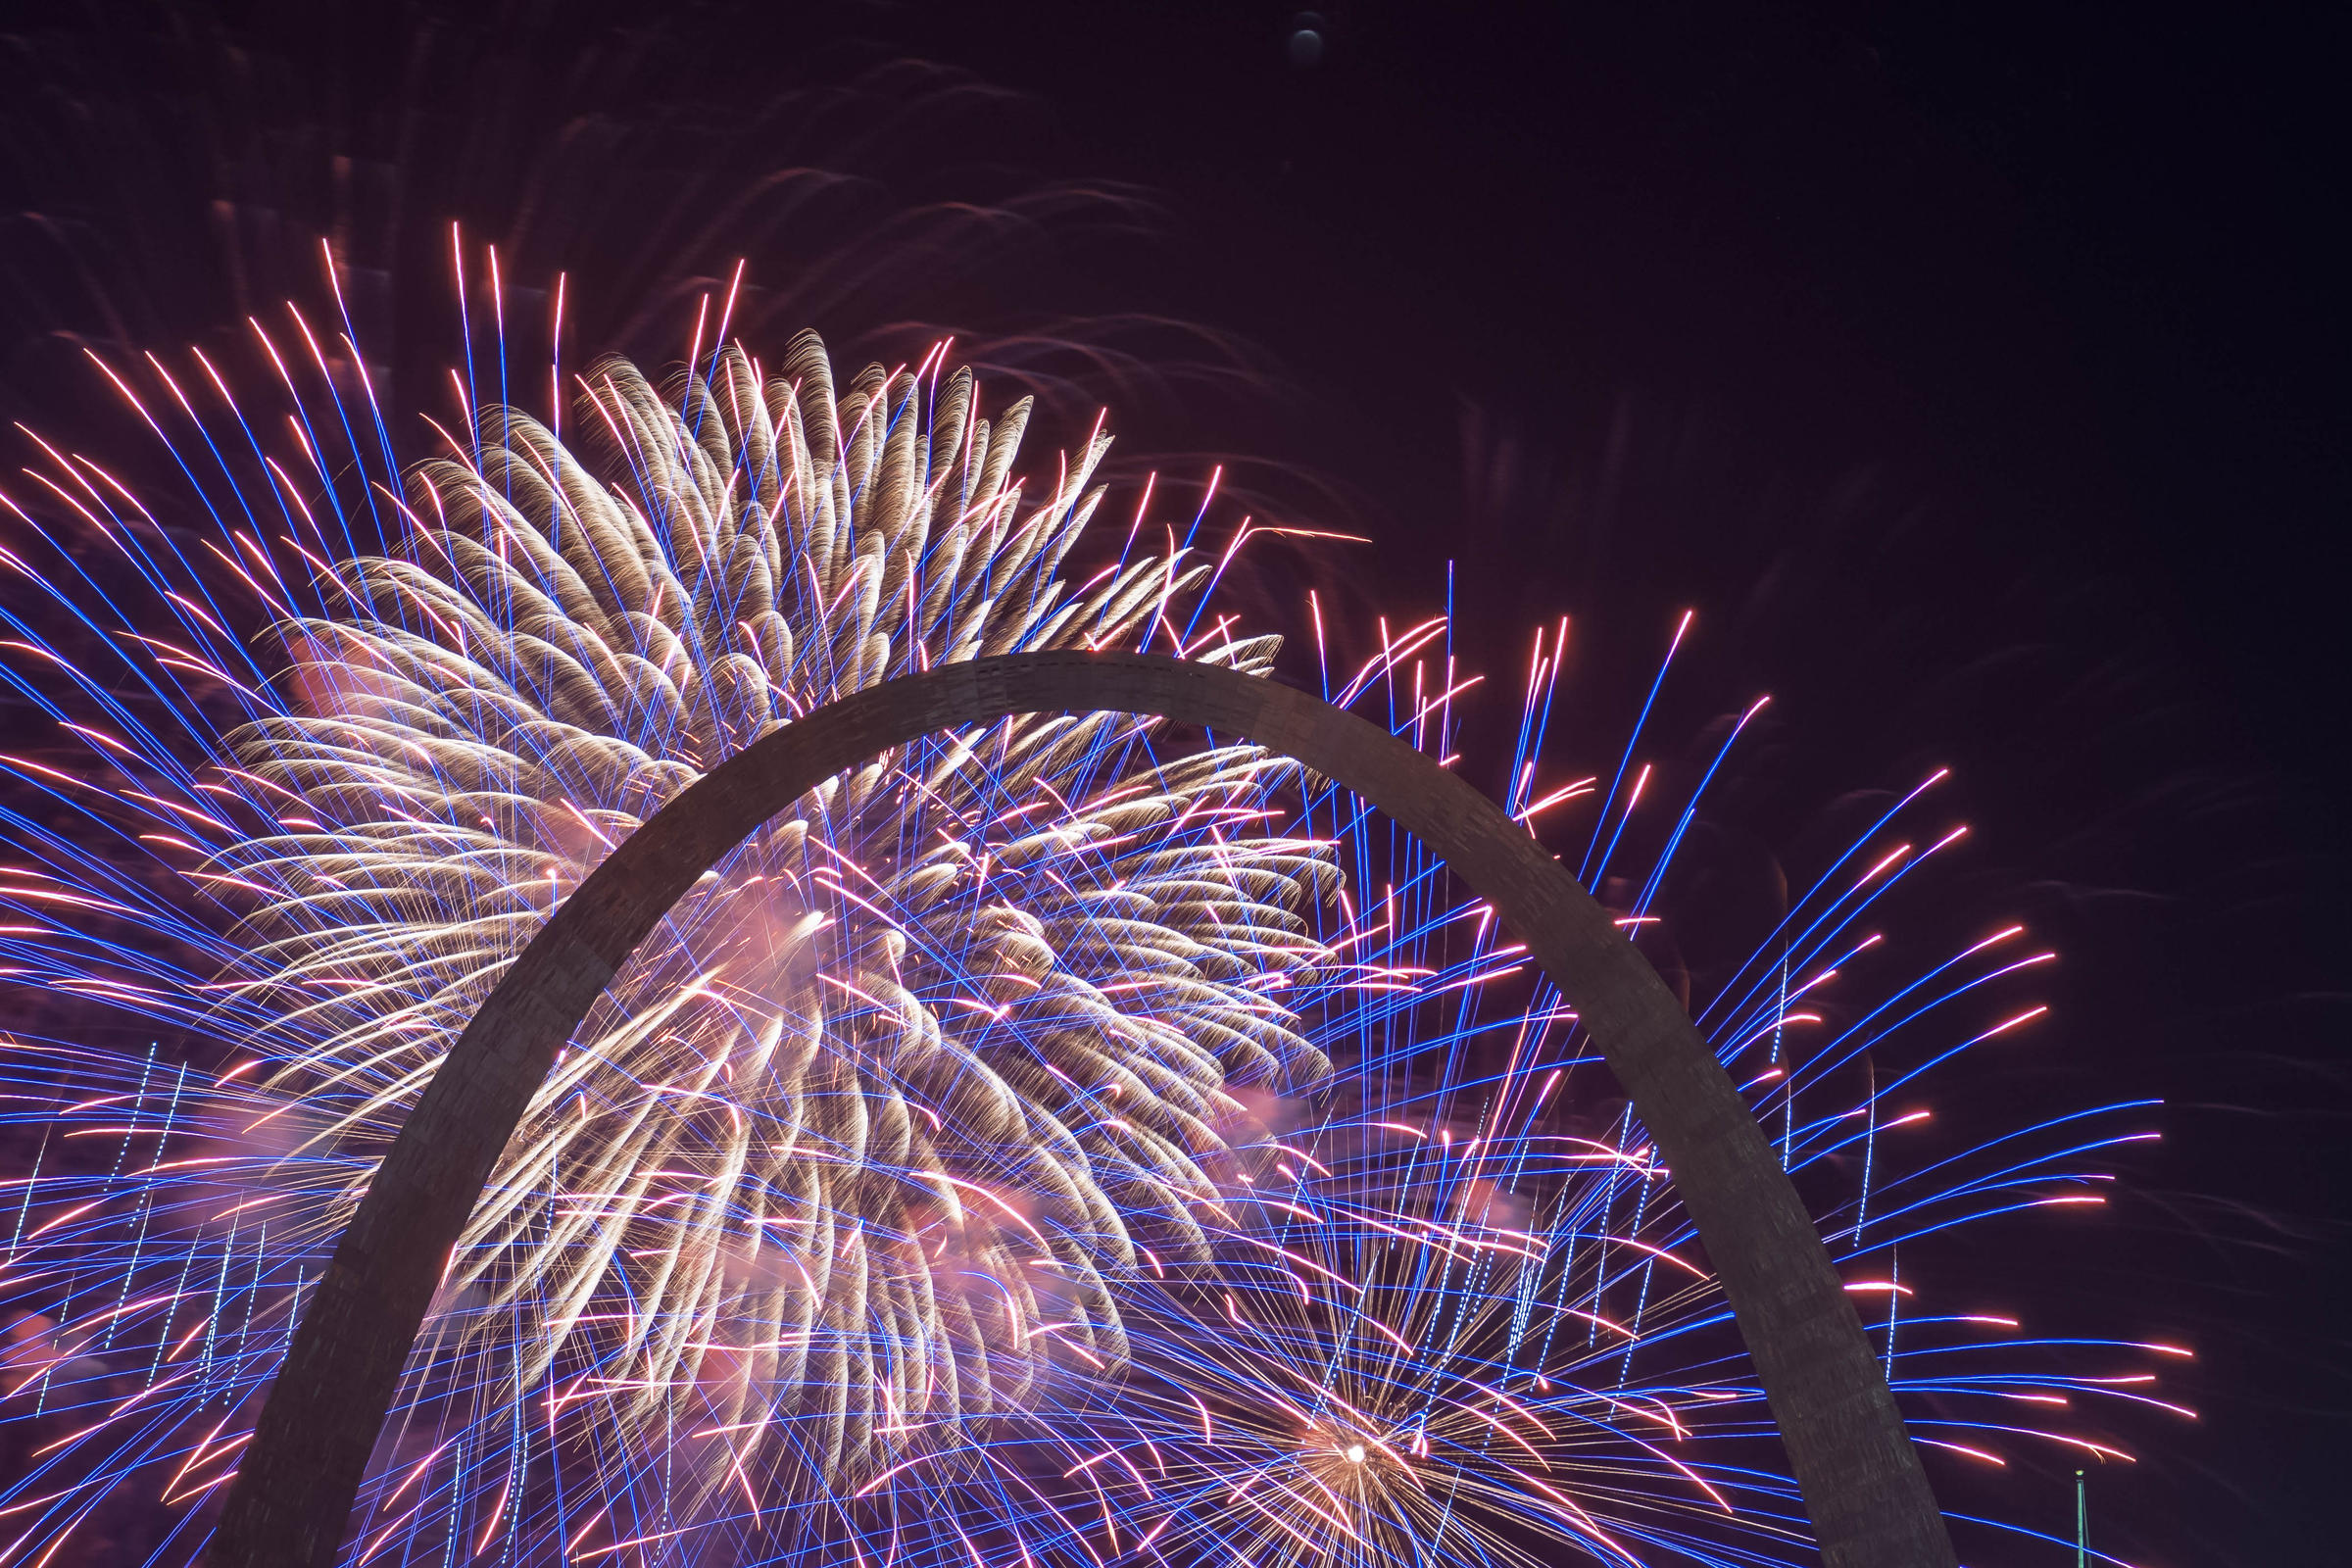 Fair skies return above Arch as St. Louis celebrates Fourth of July | St. Louis Public Radio